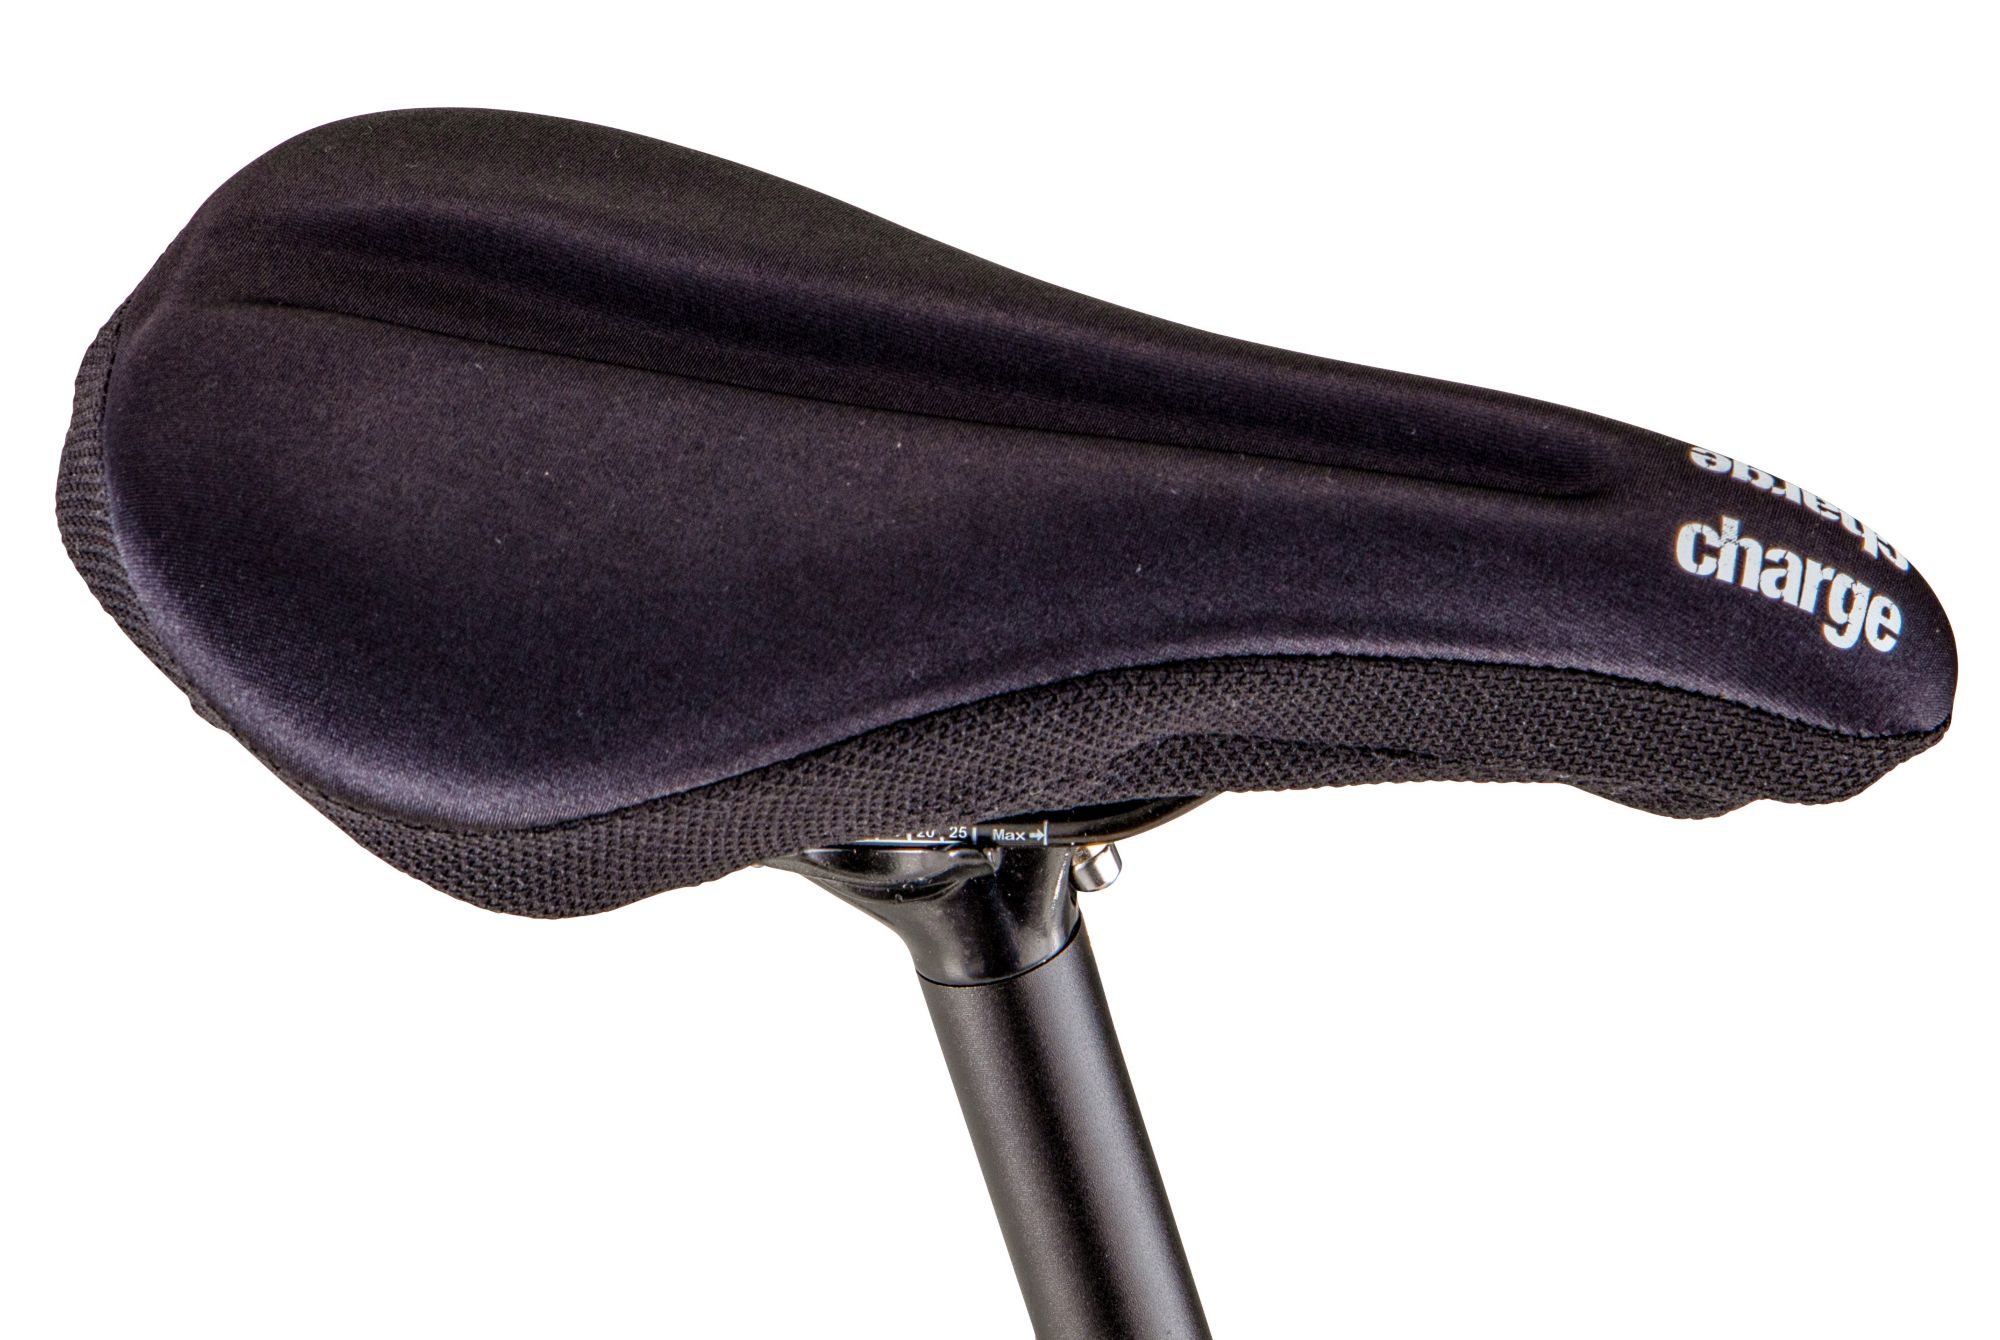 tvs sport bike seat cover